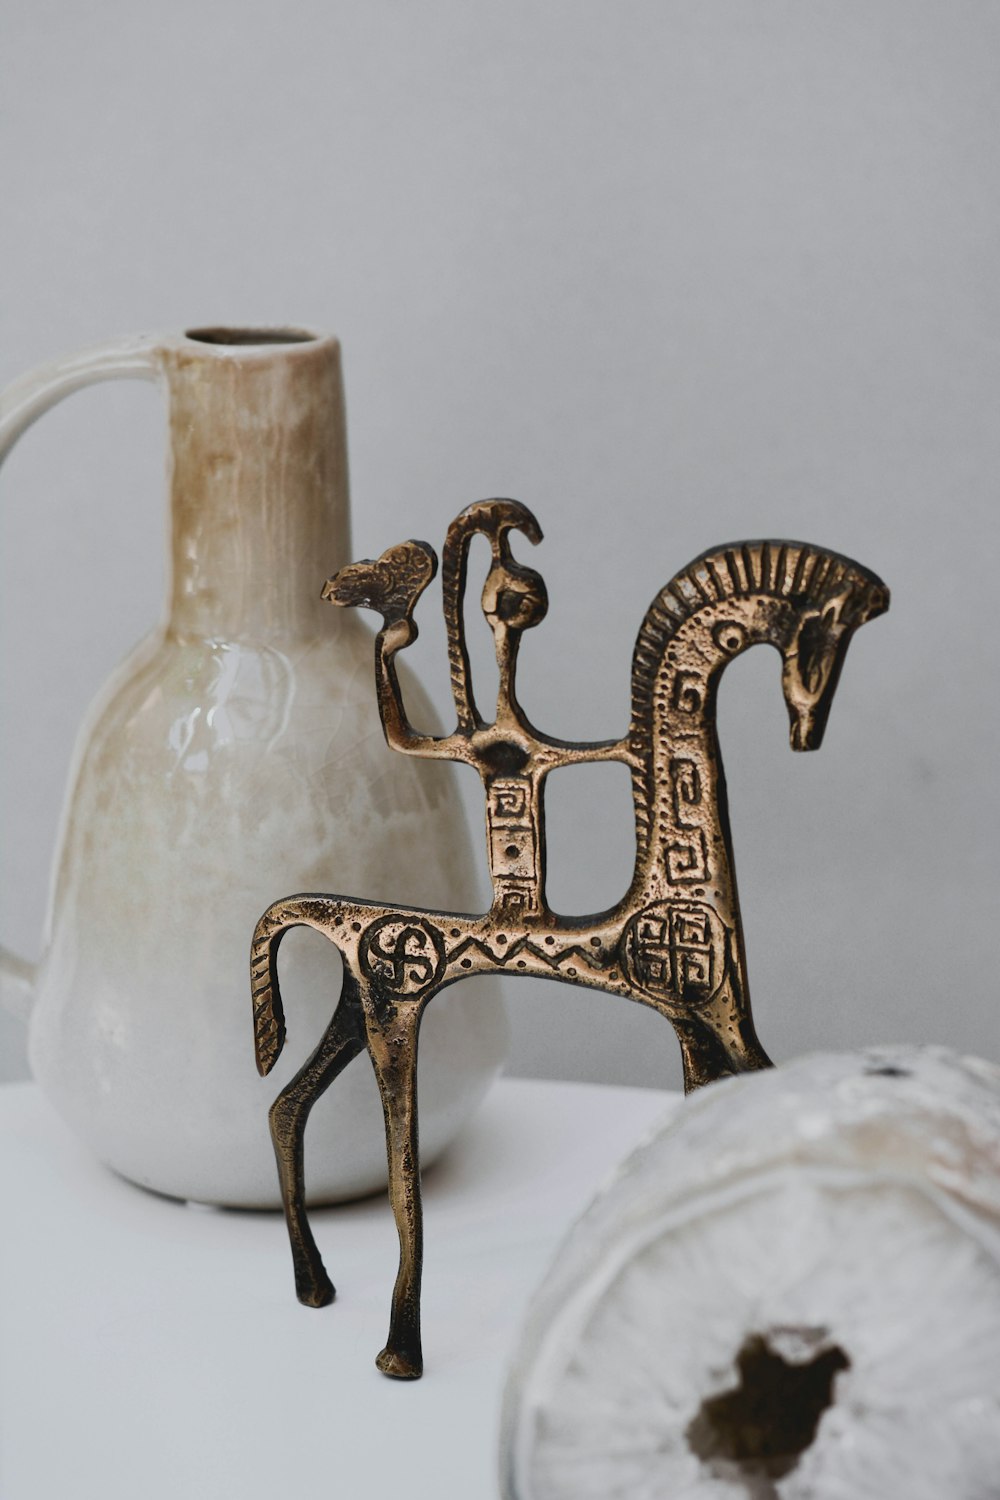 gold metal deer figurine on white textile